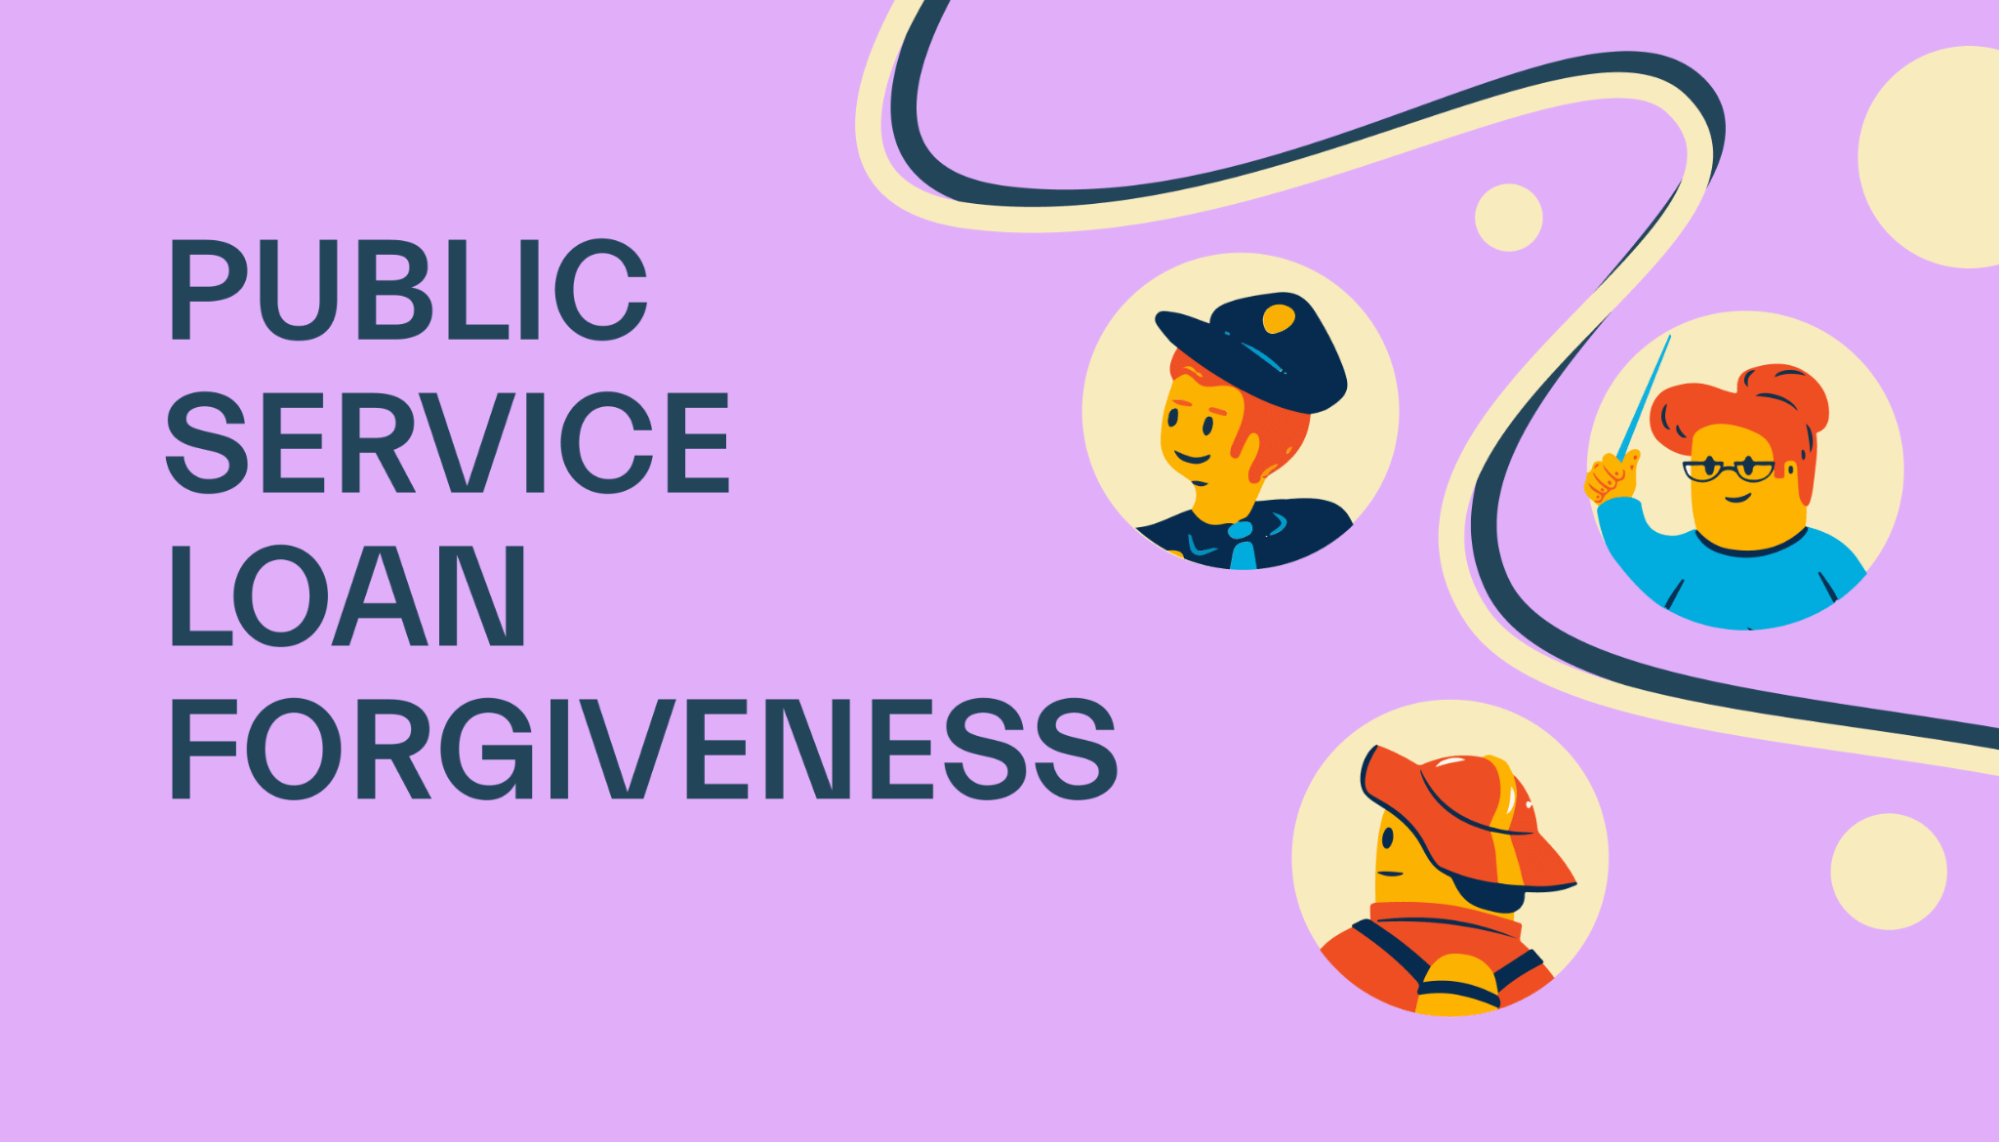 What is Public Service Loan Forgiveness